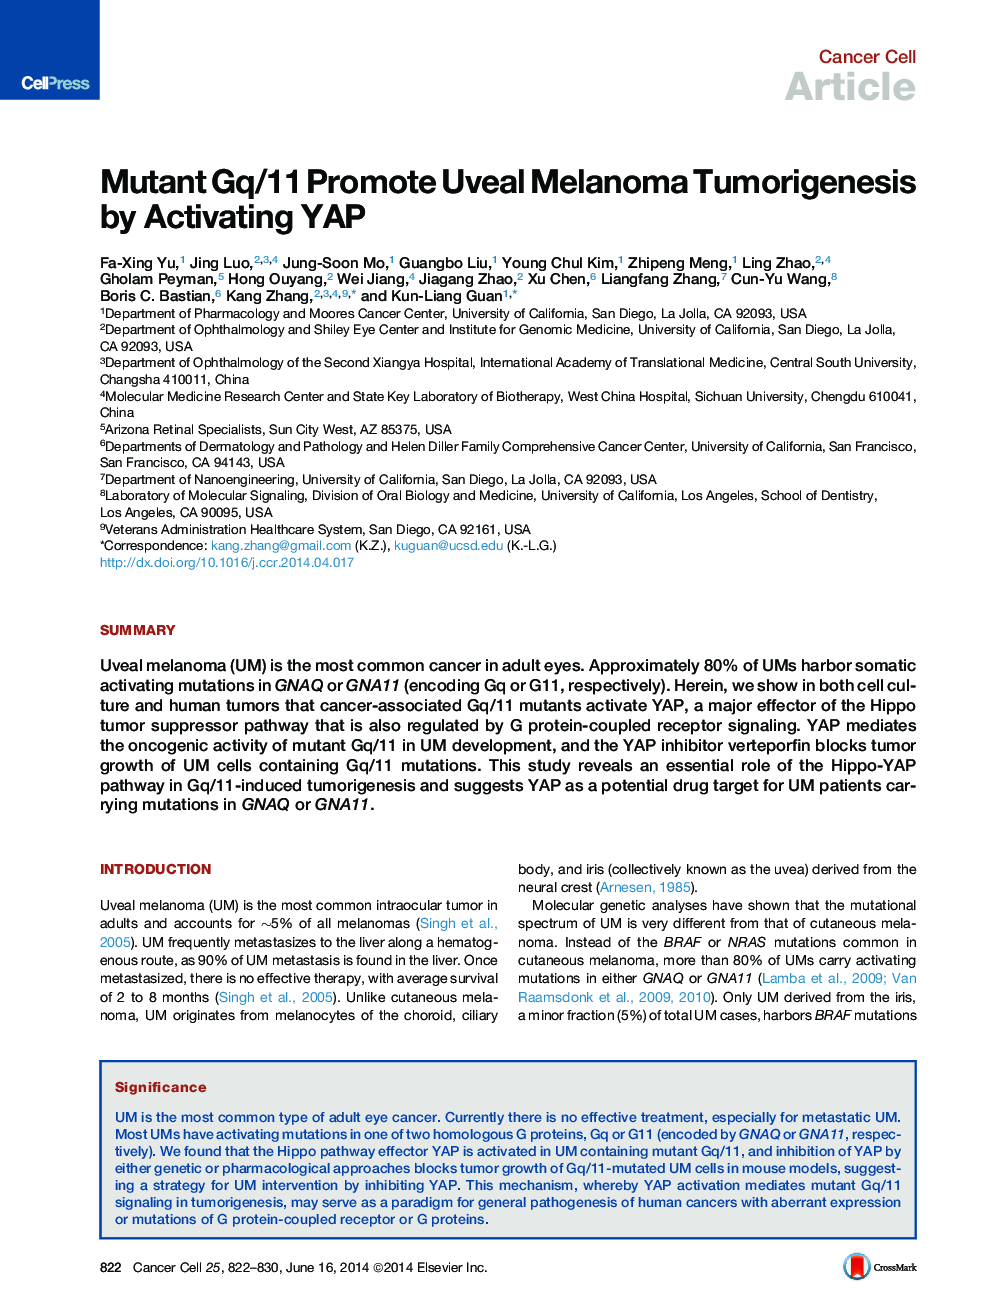 Mutant Gq/11 Promote Uveal Melanoma Tumorigenesis by Activating YAP